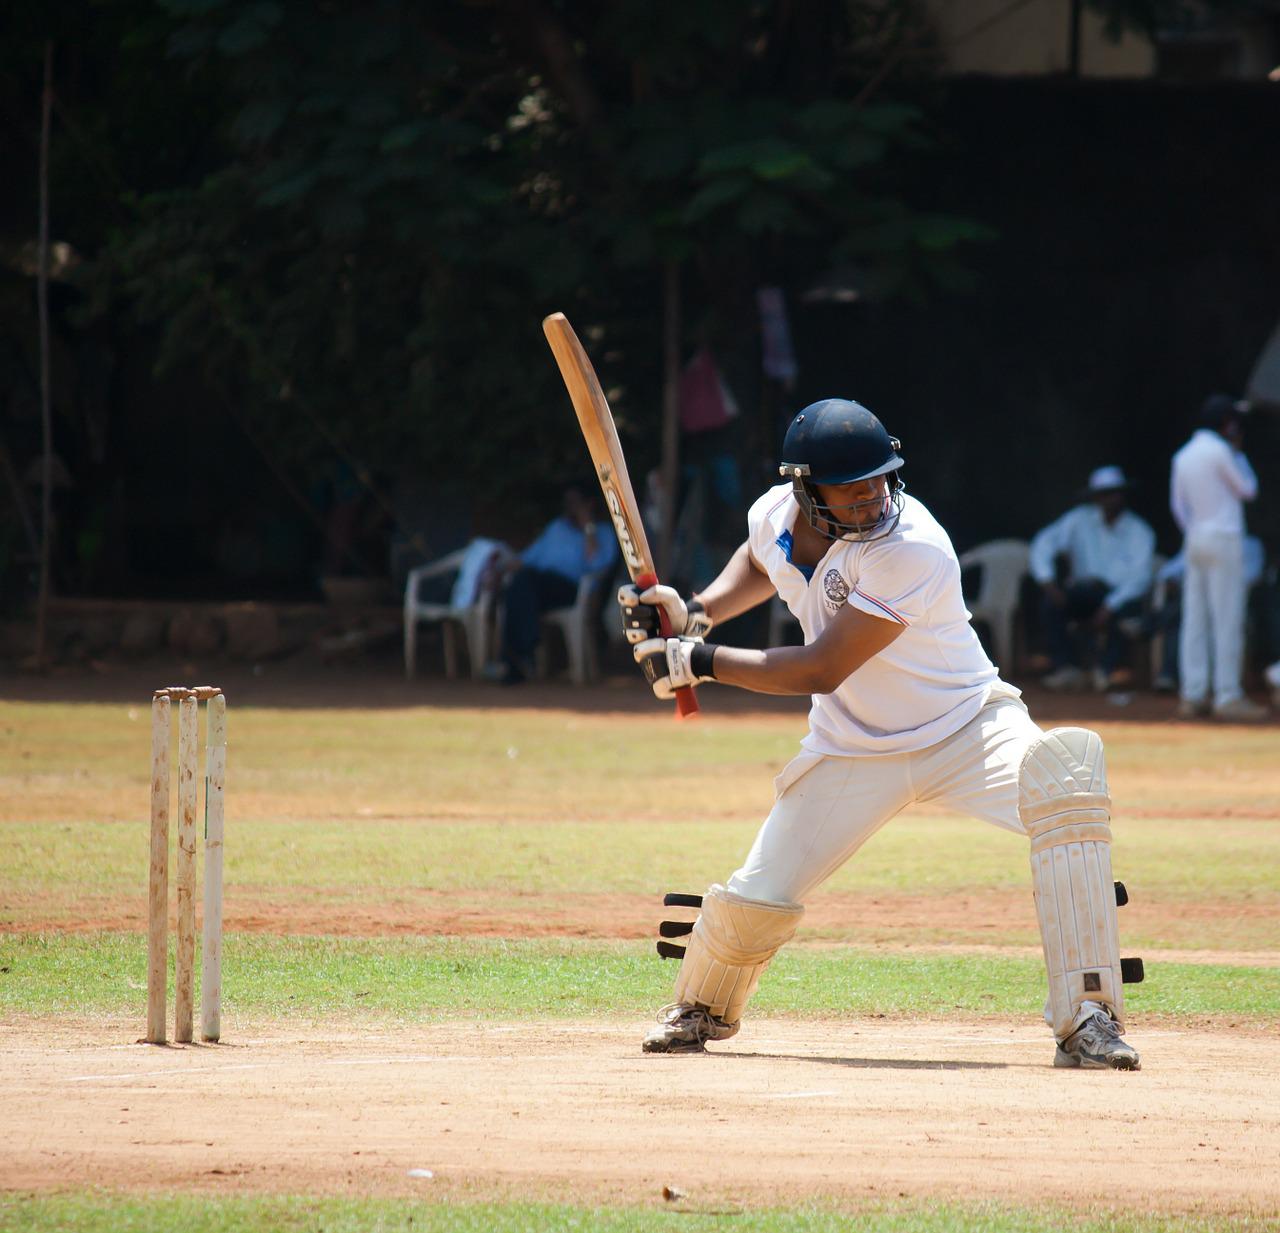 cricket, batsman, shot-166931.jpg